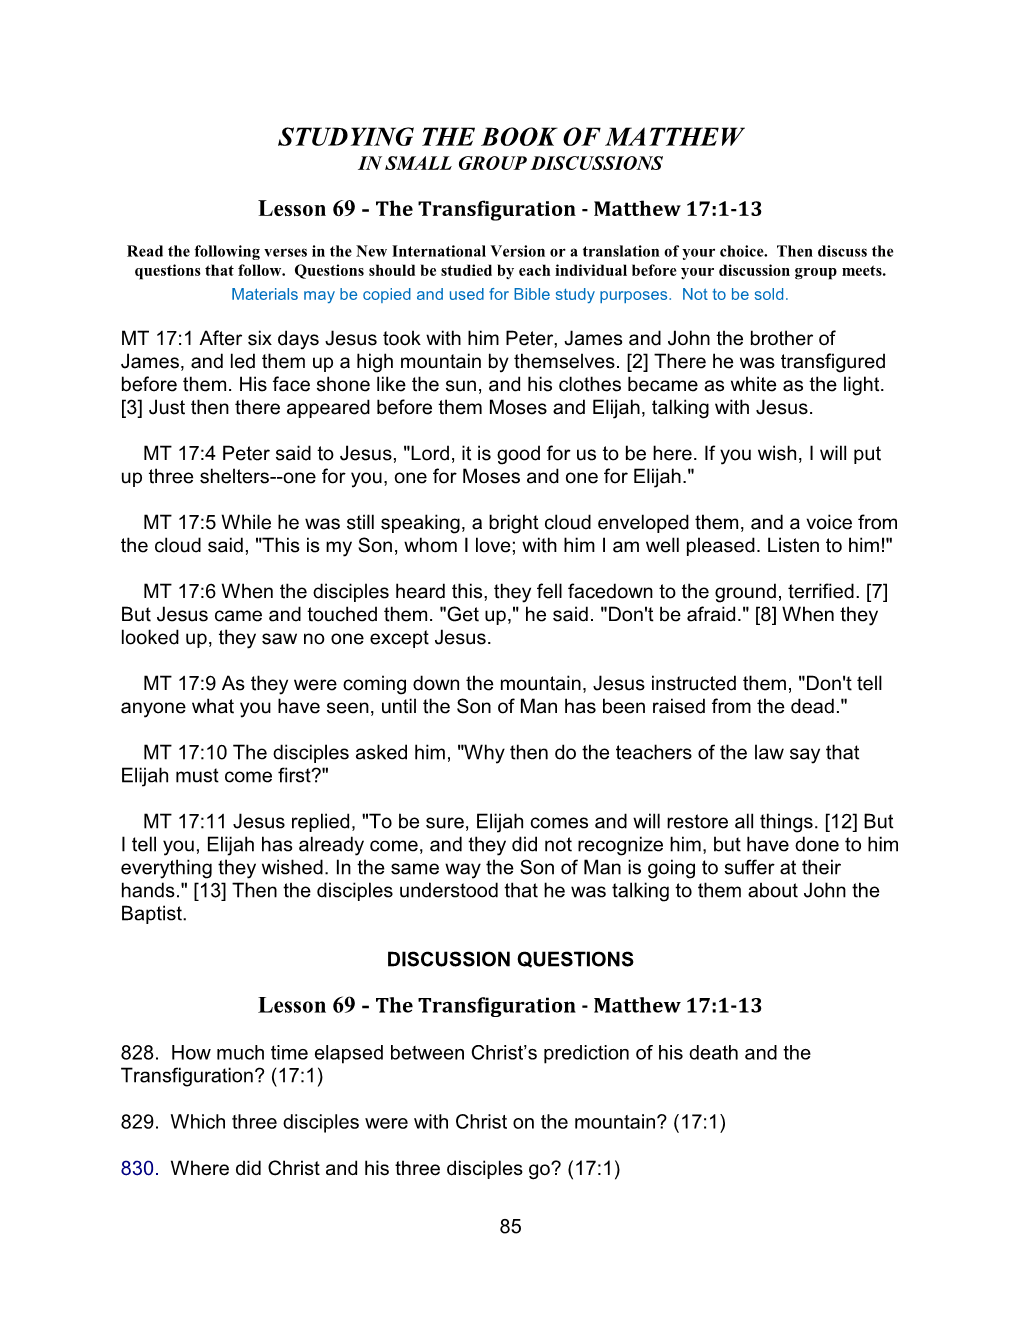 Lesson 69 - the Transfiguration - Matthew 17:1-13